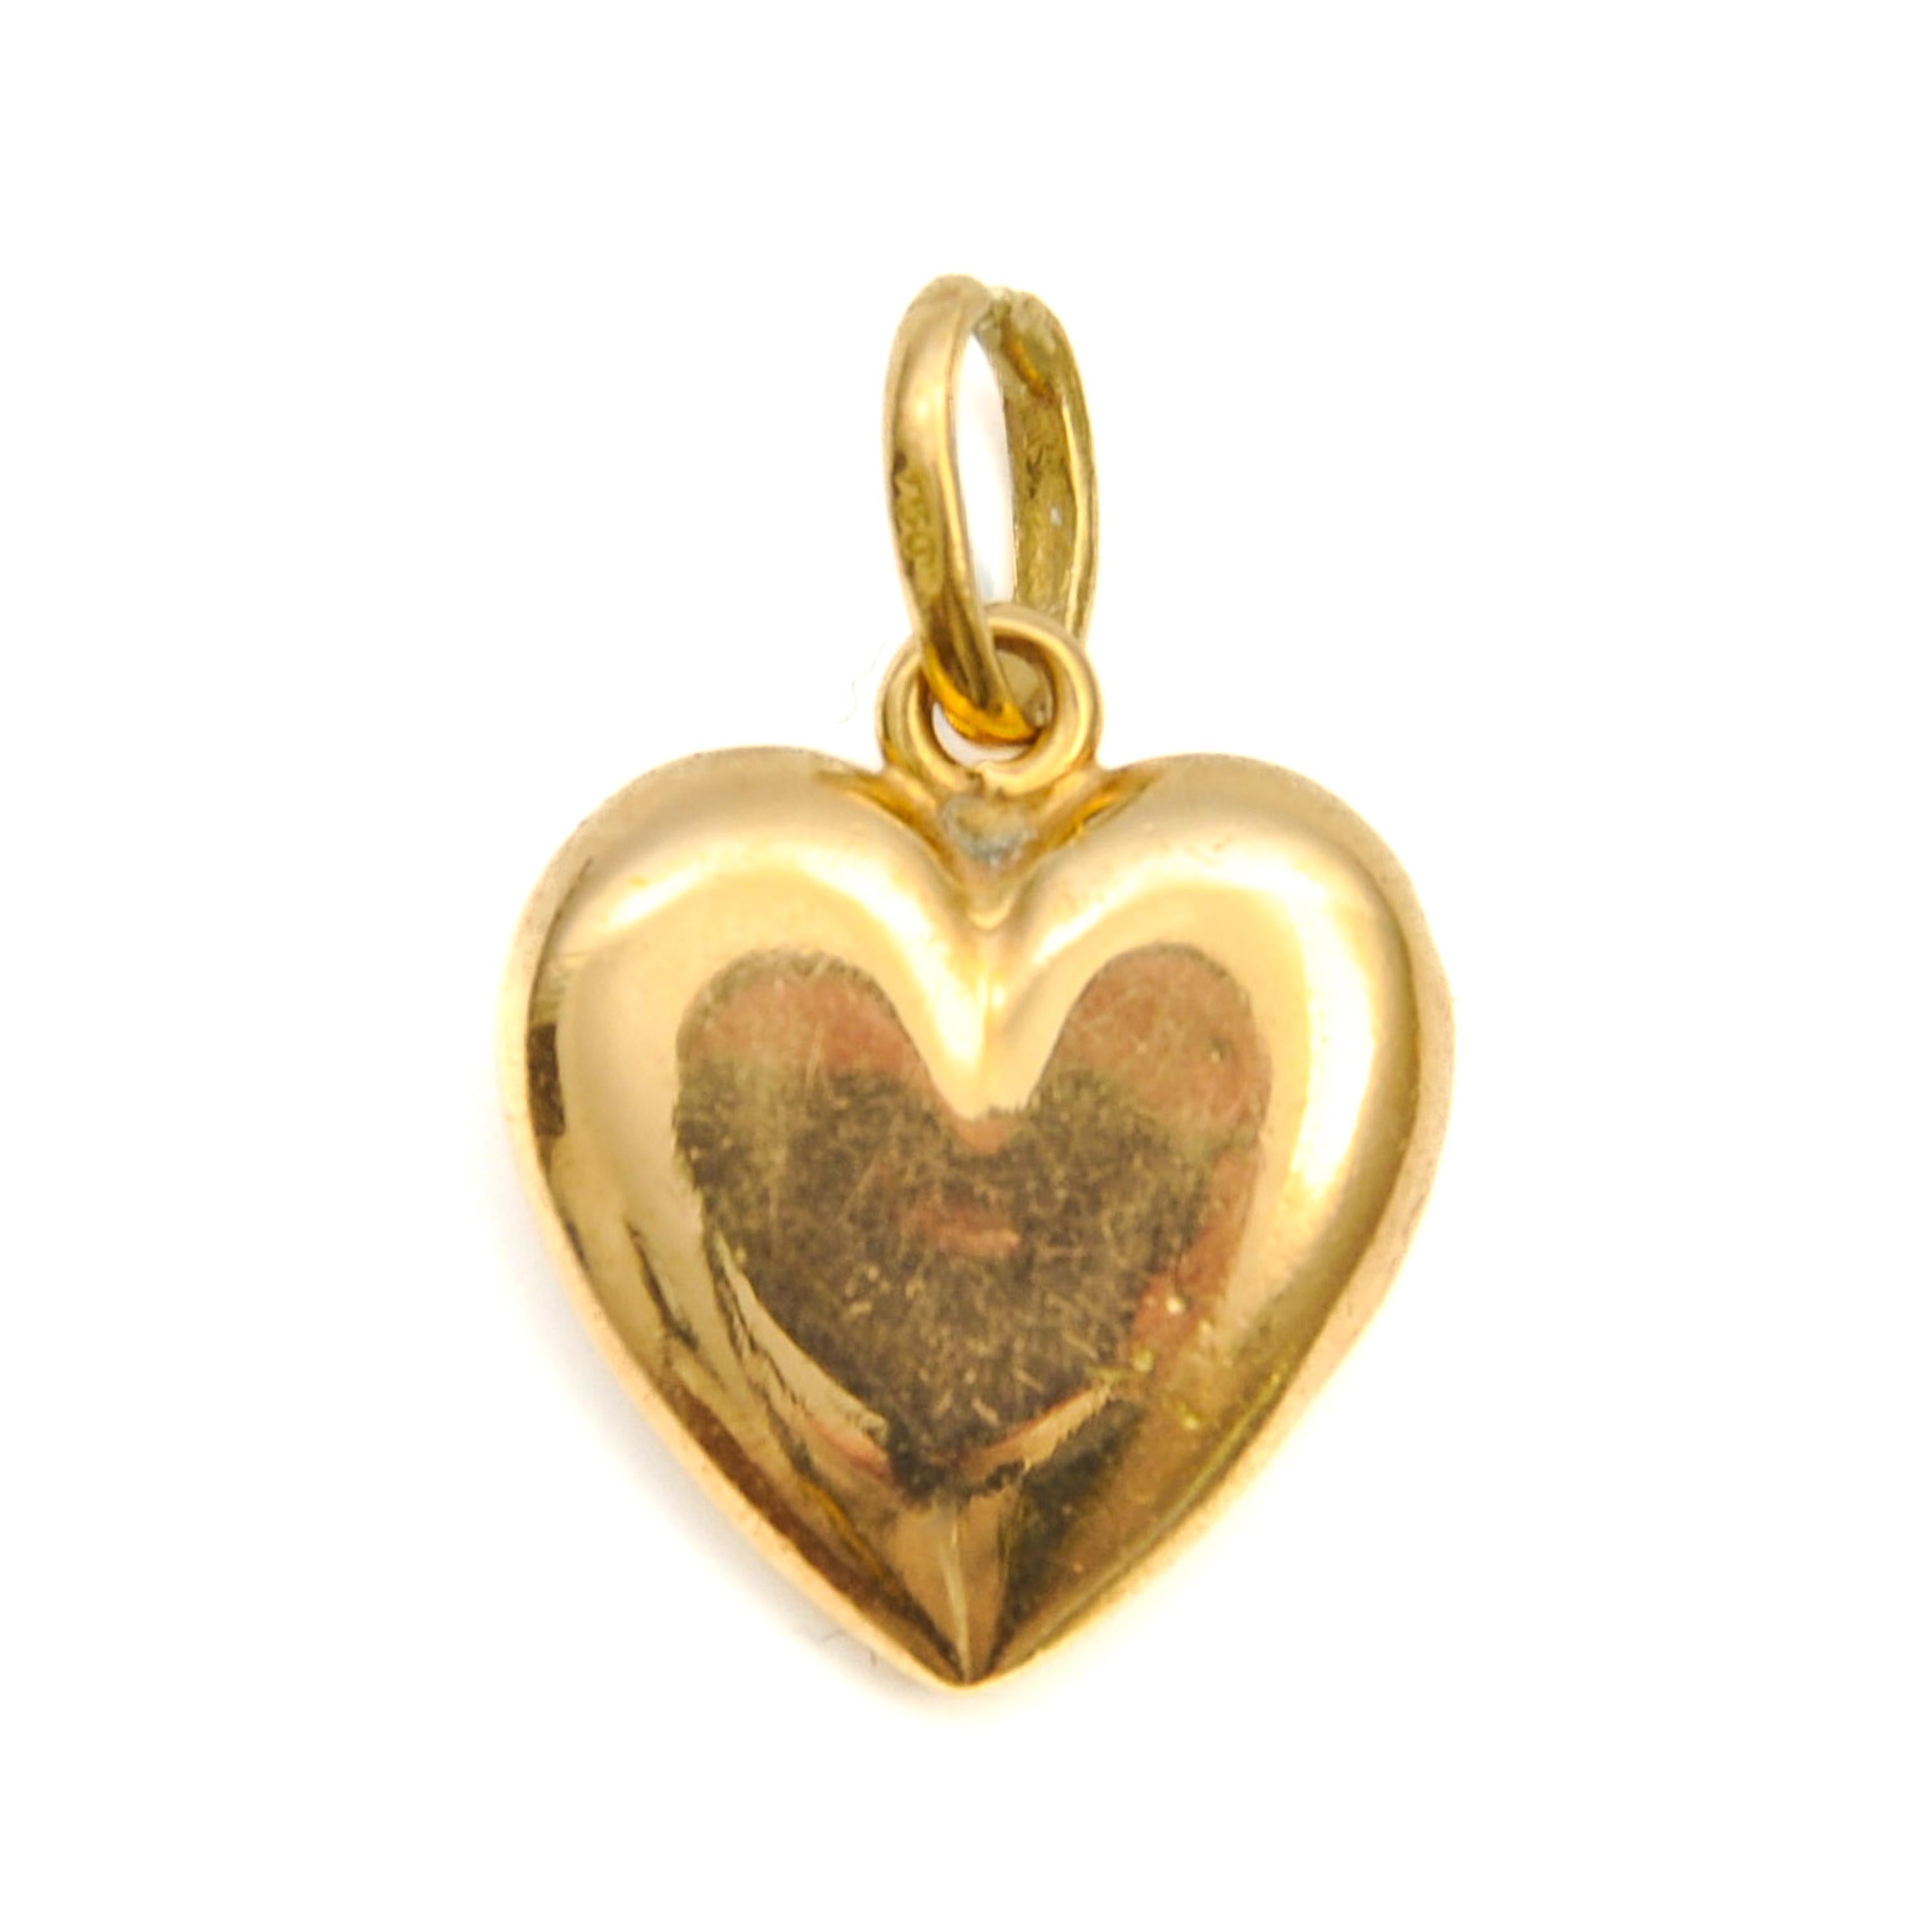 18 karat gold heart necklace